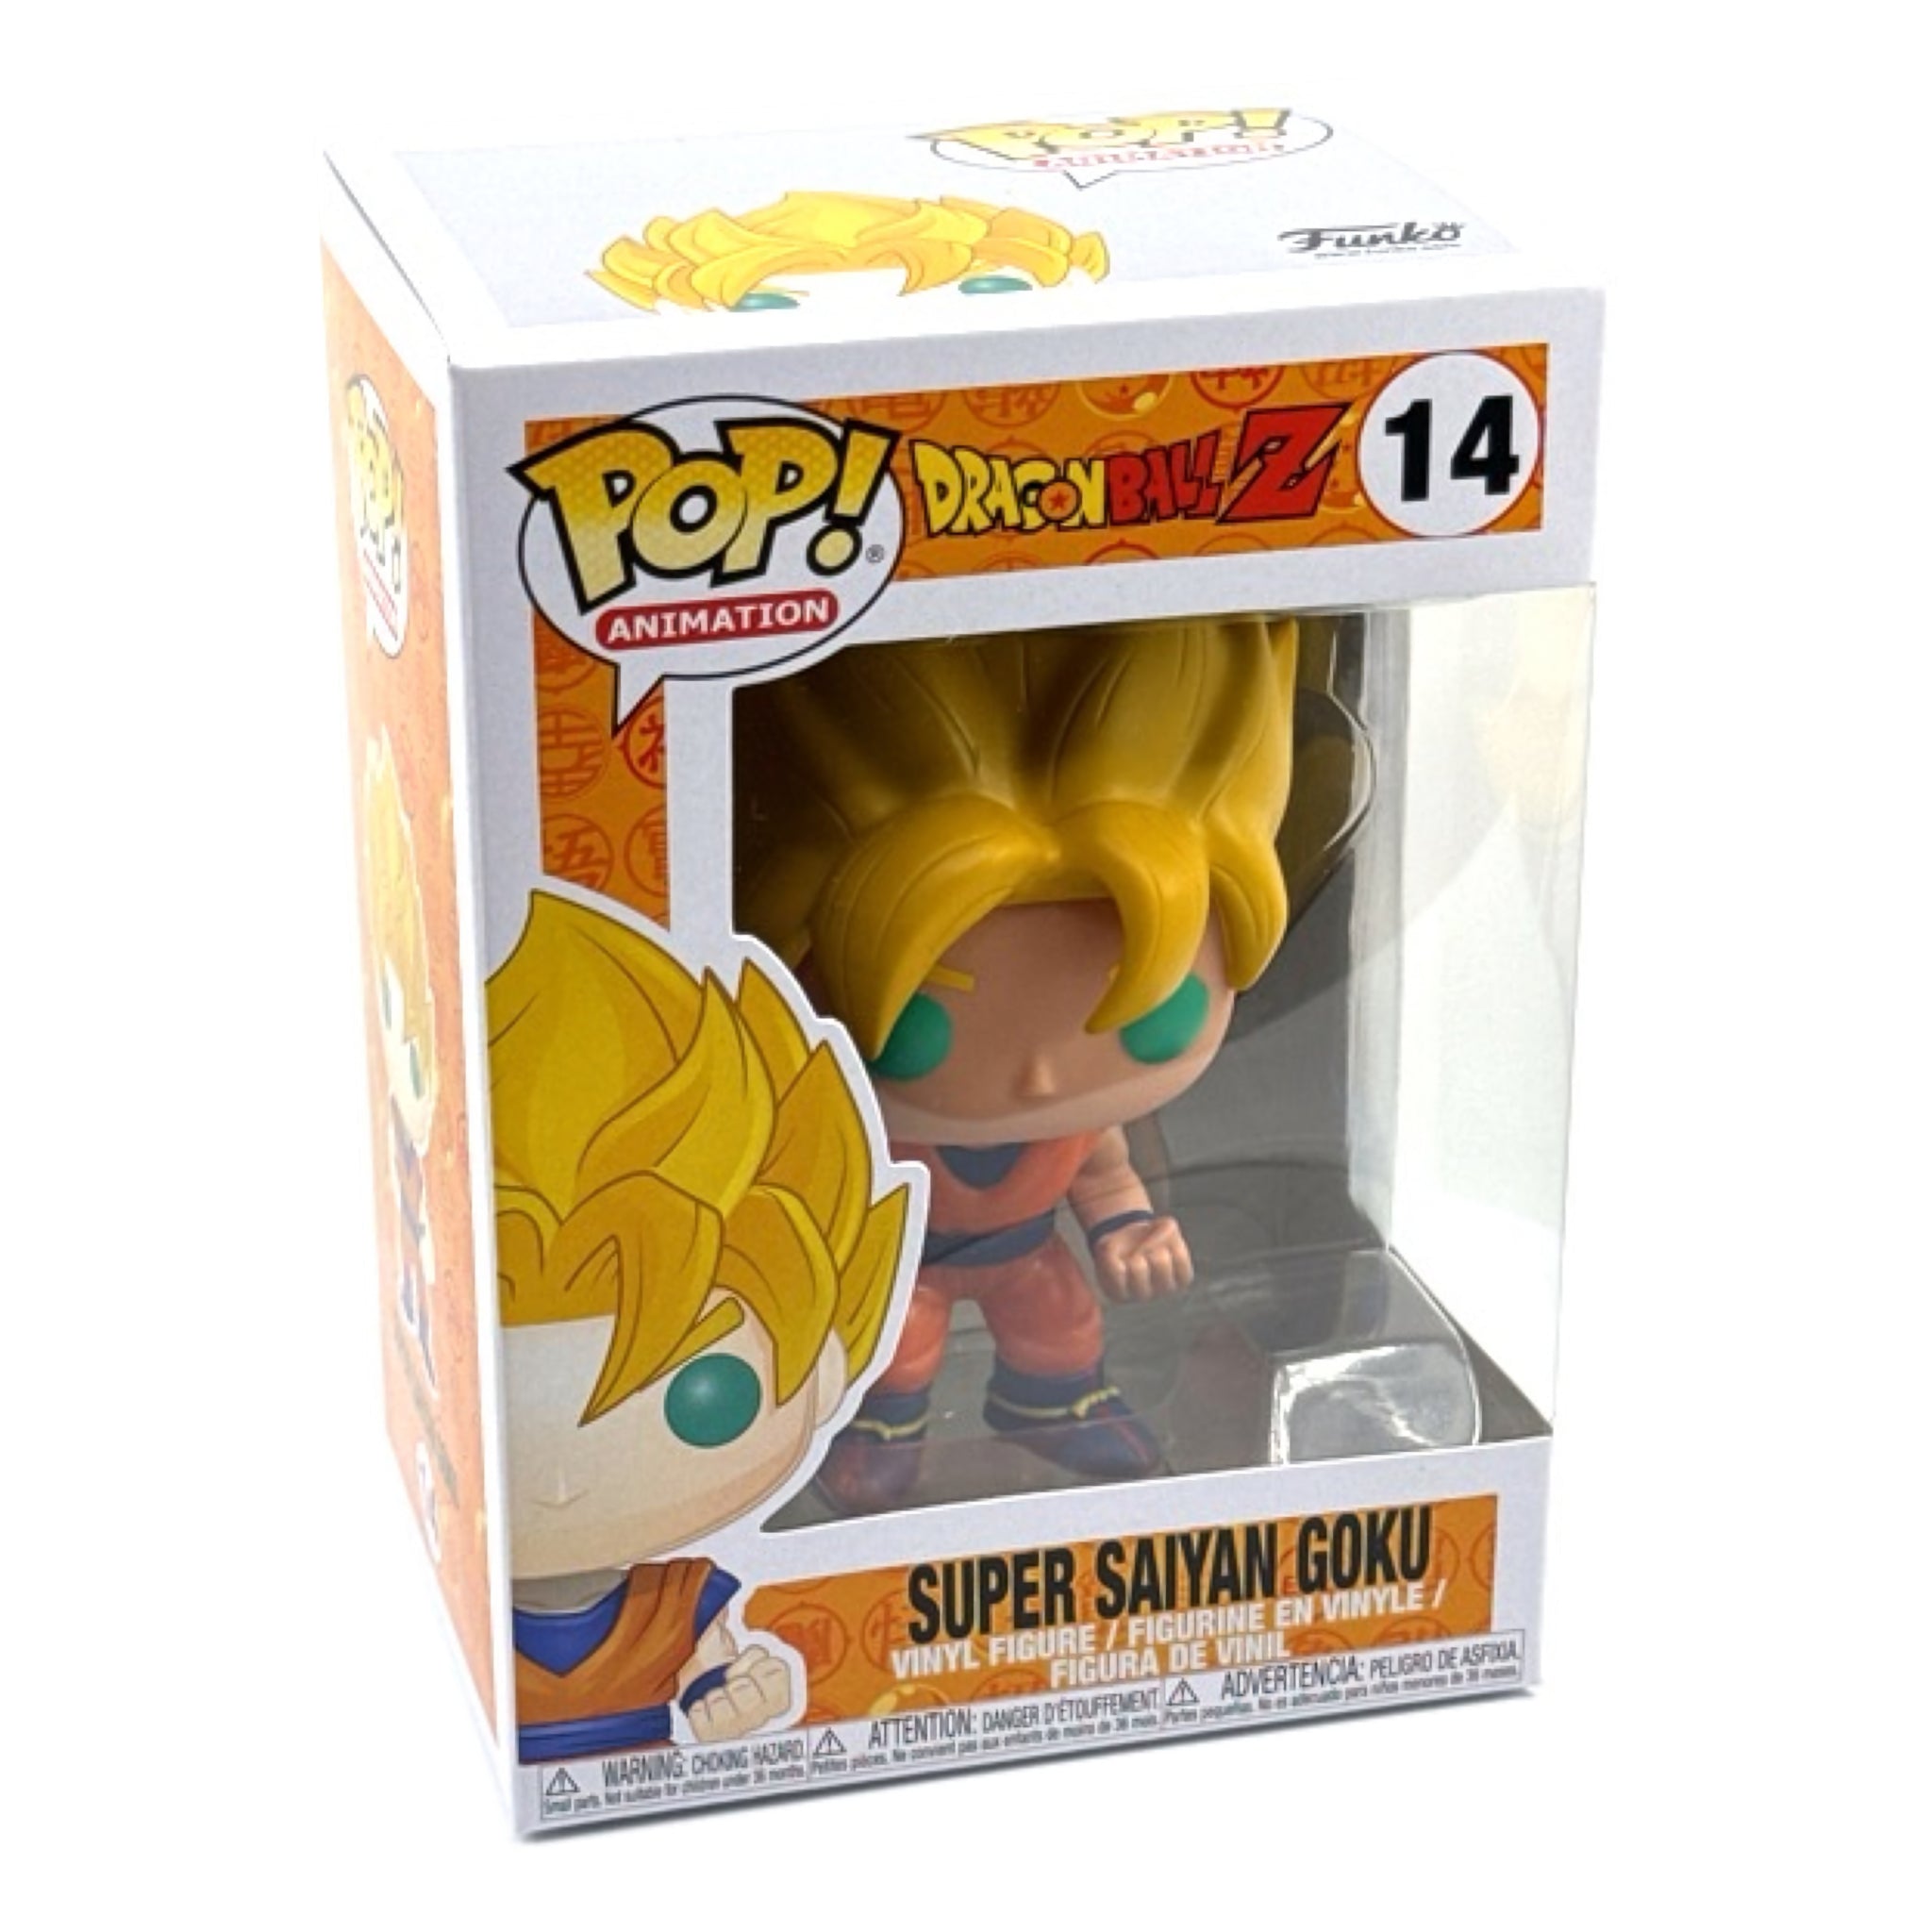 Buy Pop! Super Saiyan Goku at Funko.